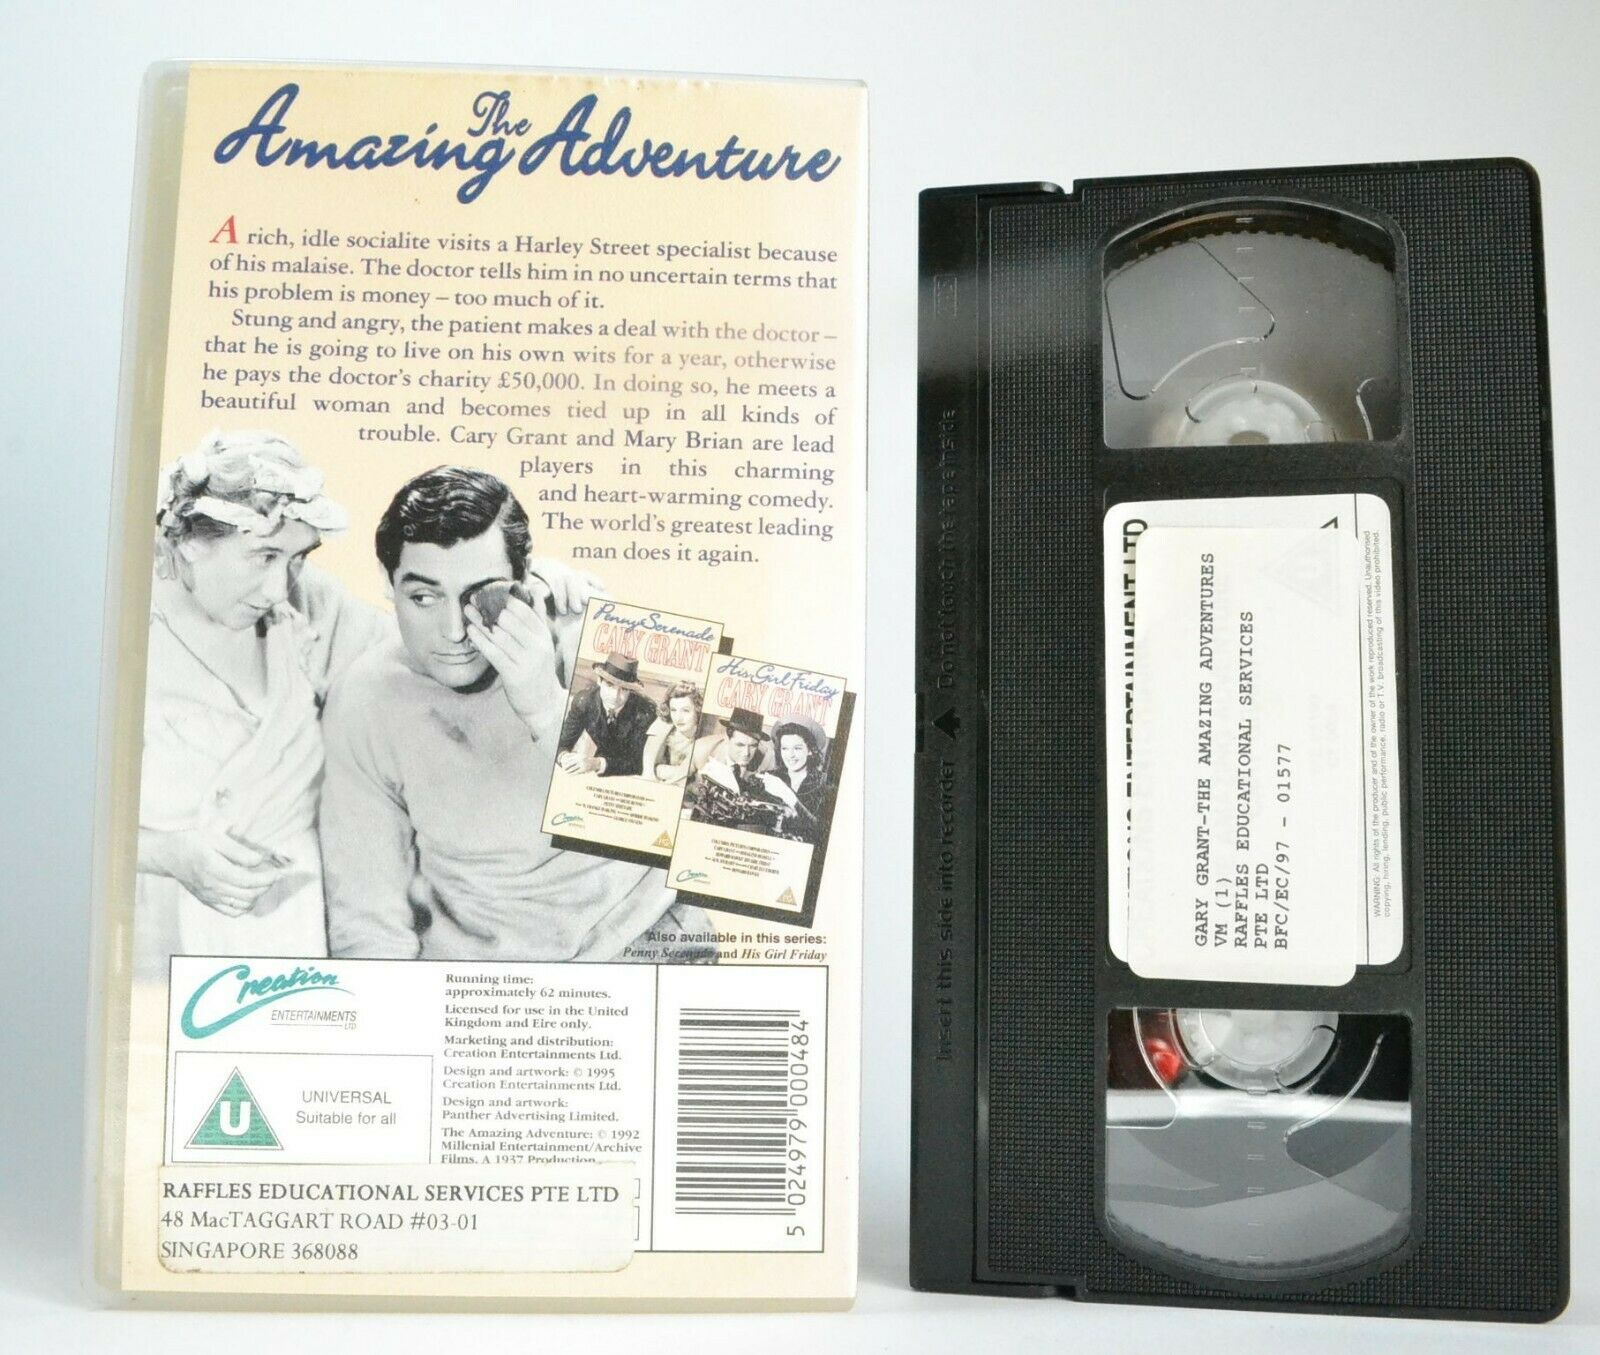 The Amazing Adventure (1936): Romantic Drama - Cary Grant / Mary Brian - VHS-